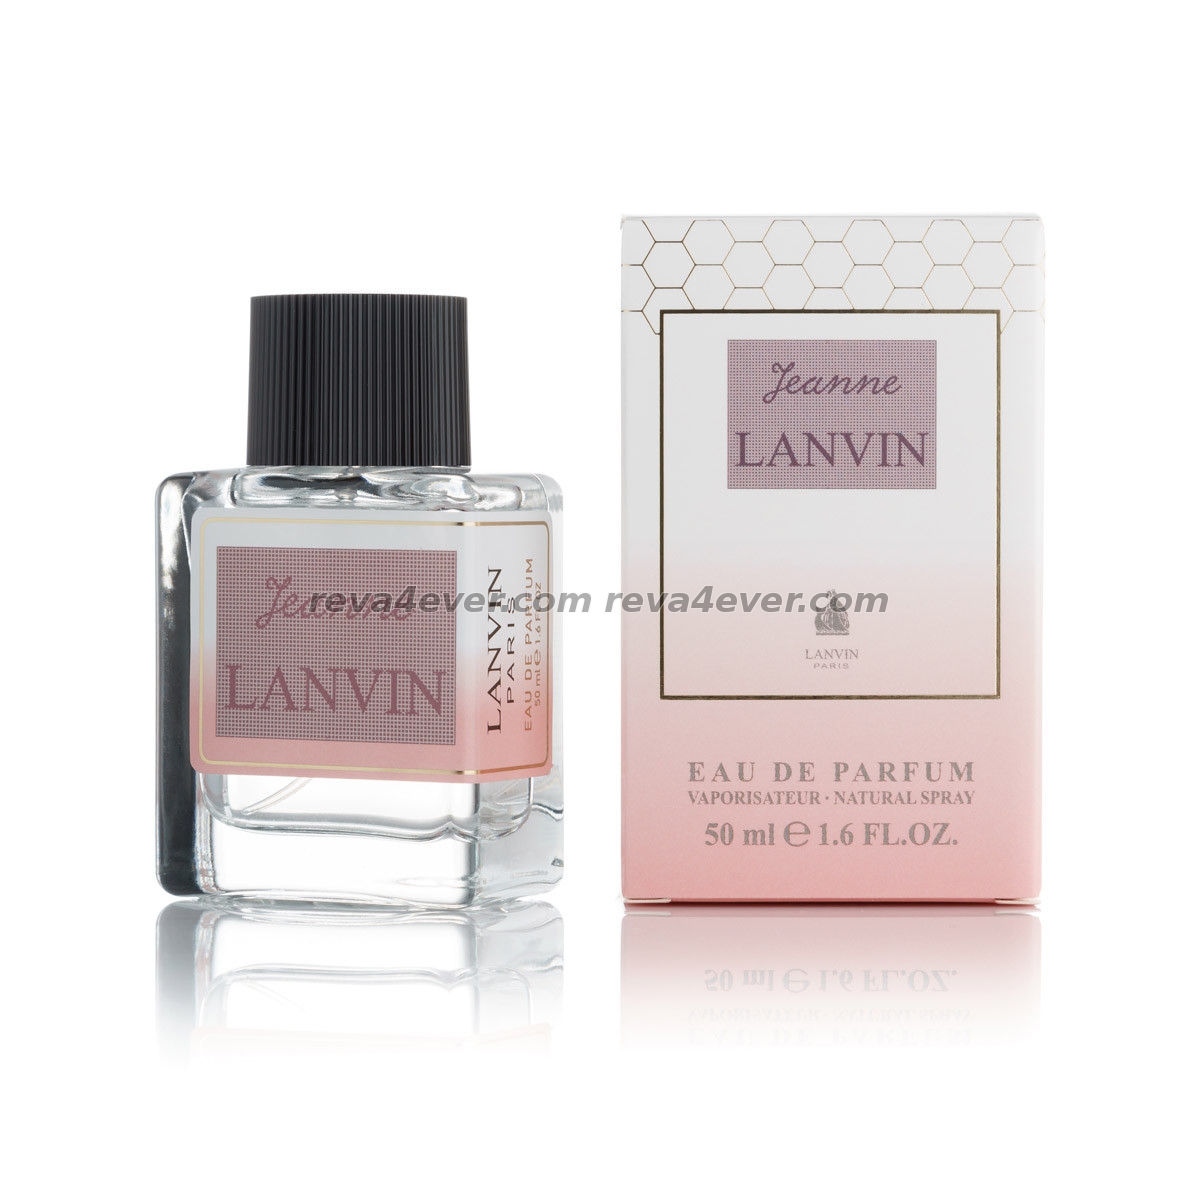 Lanvin Jeanne Lanvin Couture edp 50 ml color box